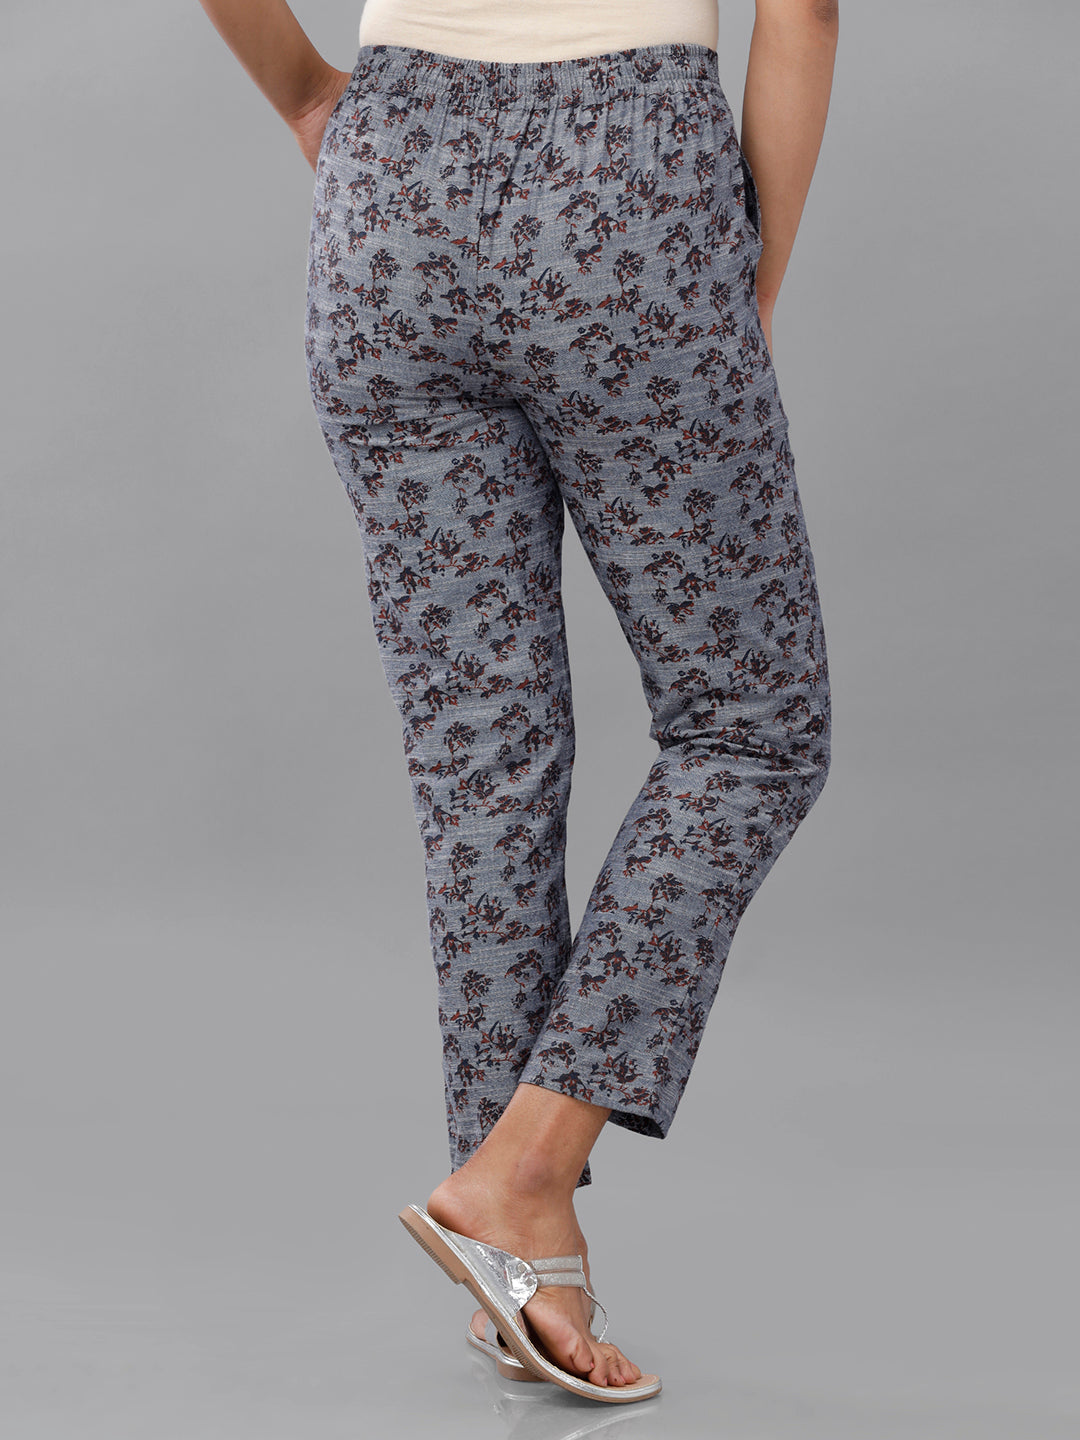 Jockey Yoga Pants | Women's Scrub Pants | Medical Scrubs Online –  Labwear.com